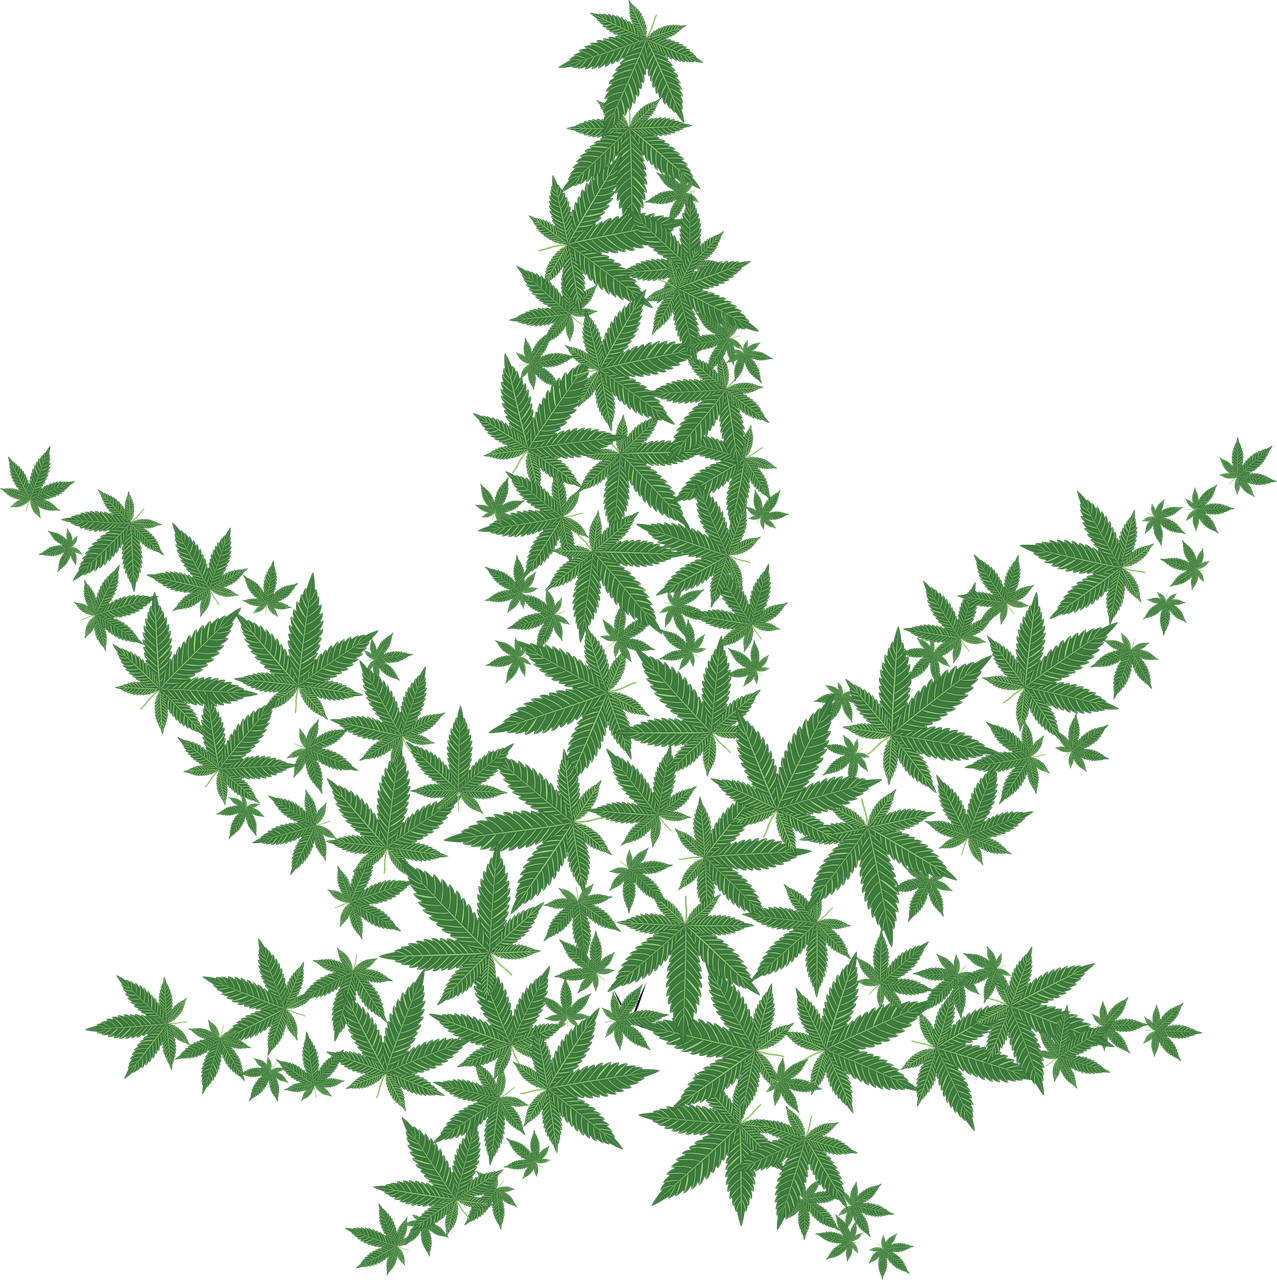 Cannabis business development workshops coming up (press.